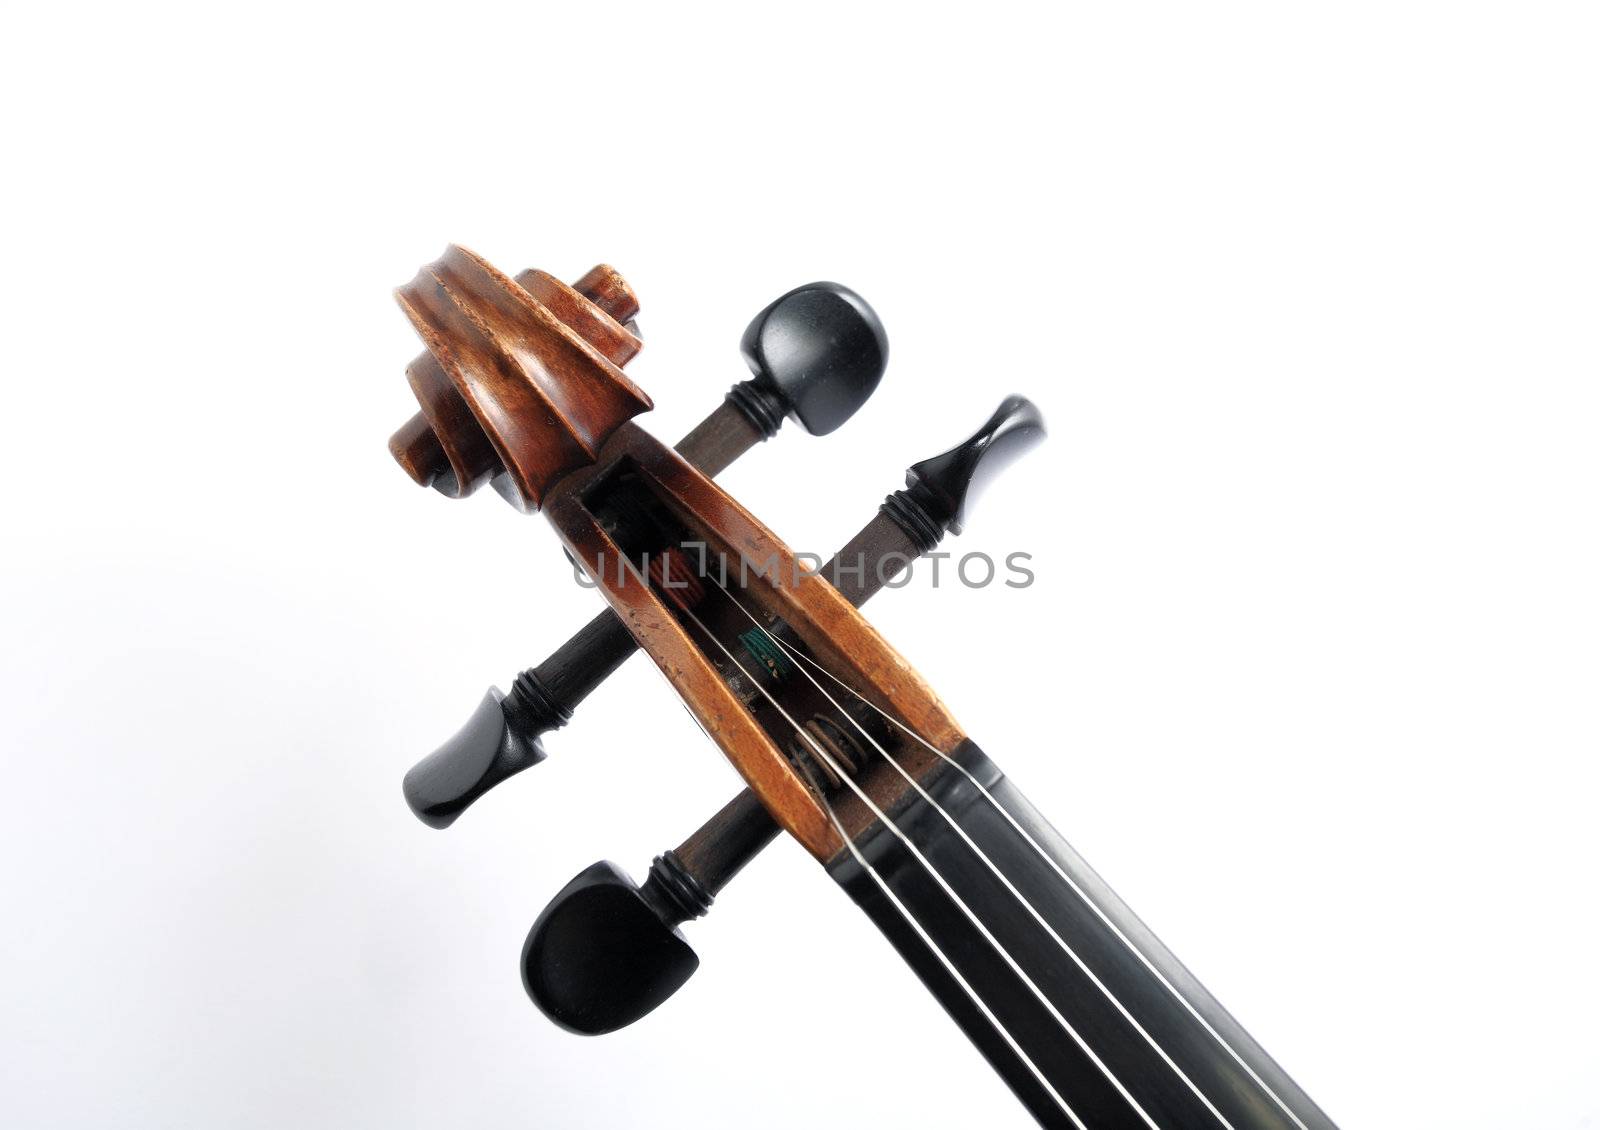 Details of violin head